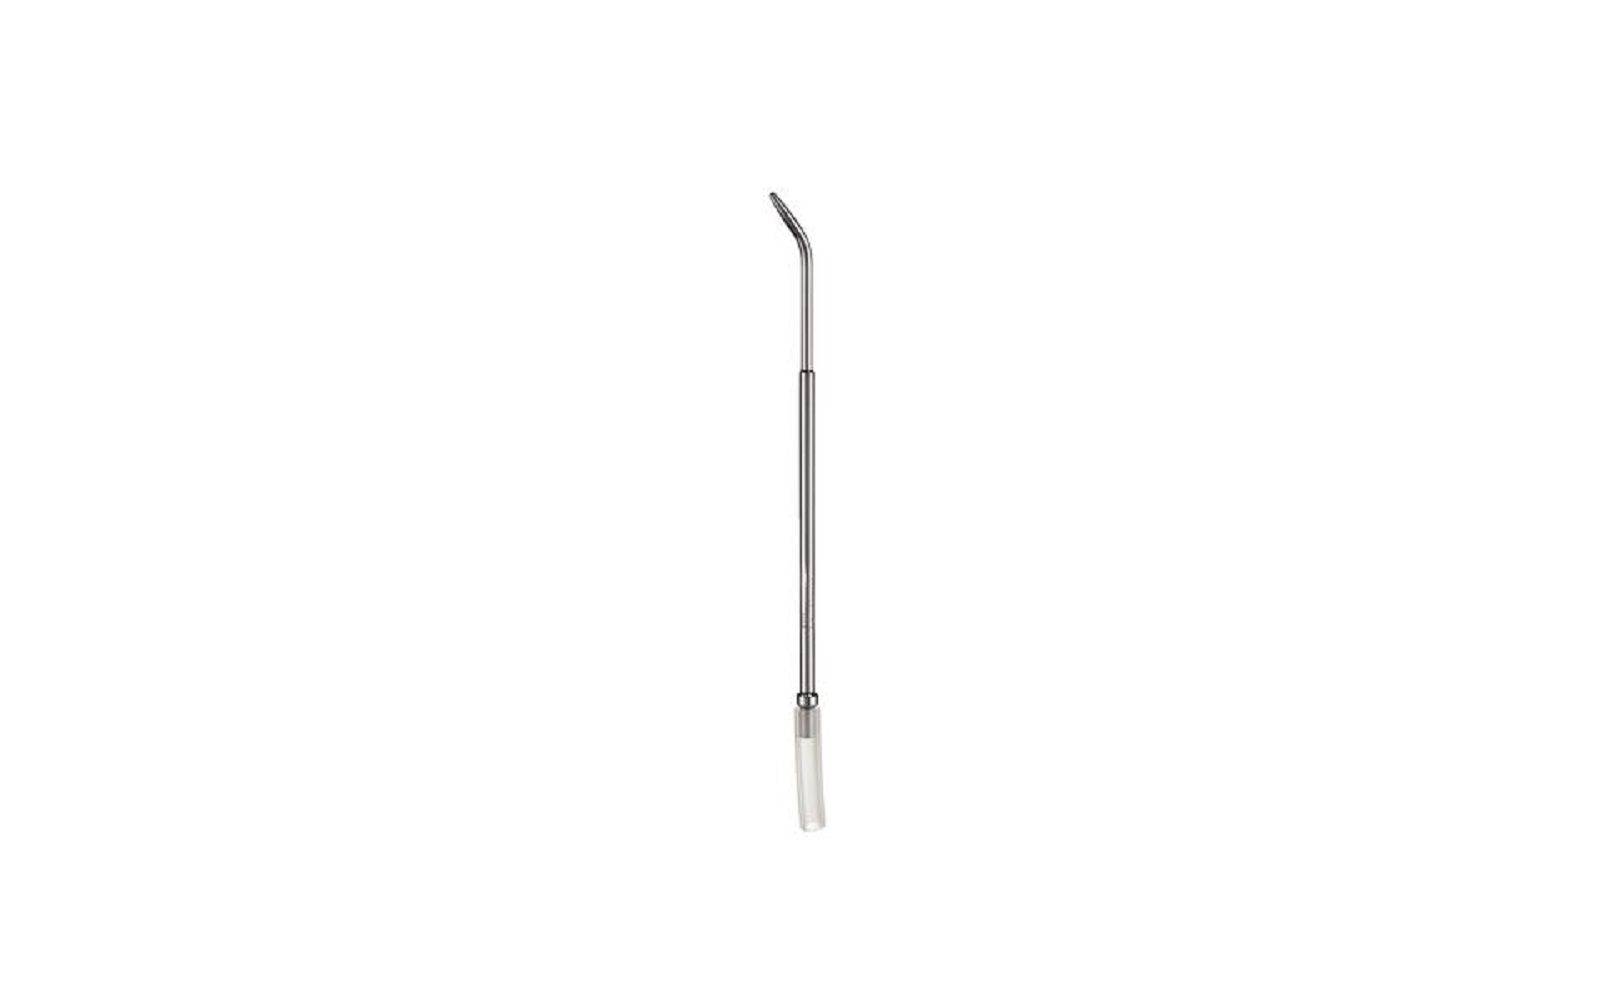 Oral surgery aspirators - 1 mm